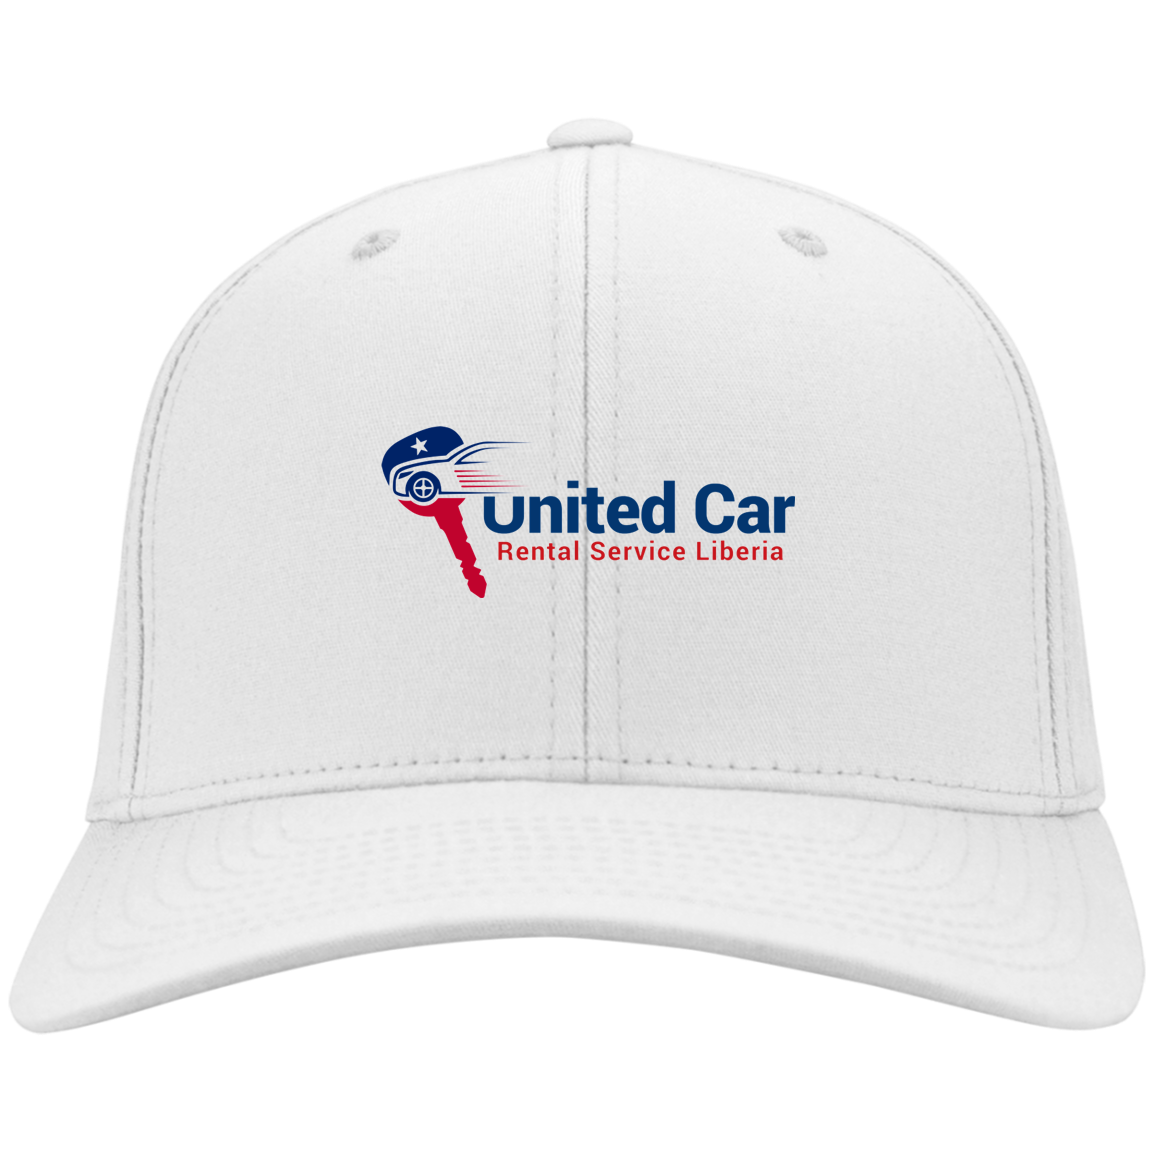 United Car Rental Service Liberia Twill Cap